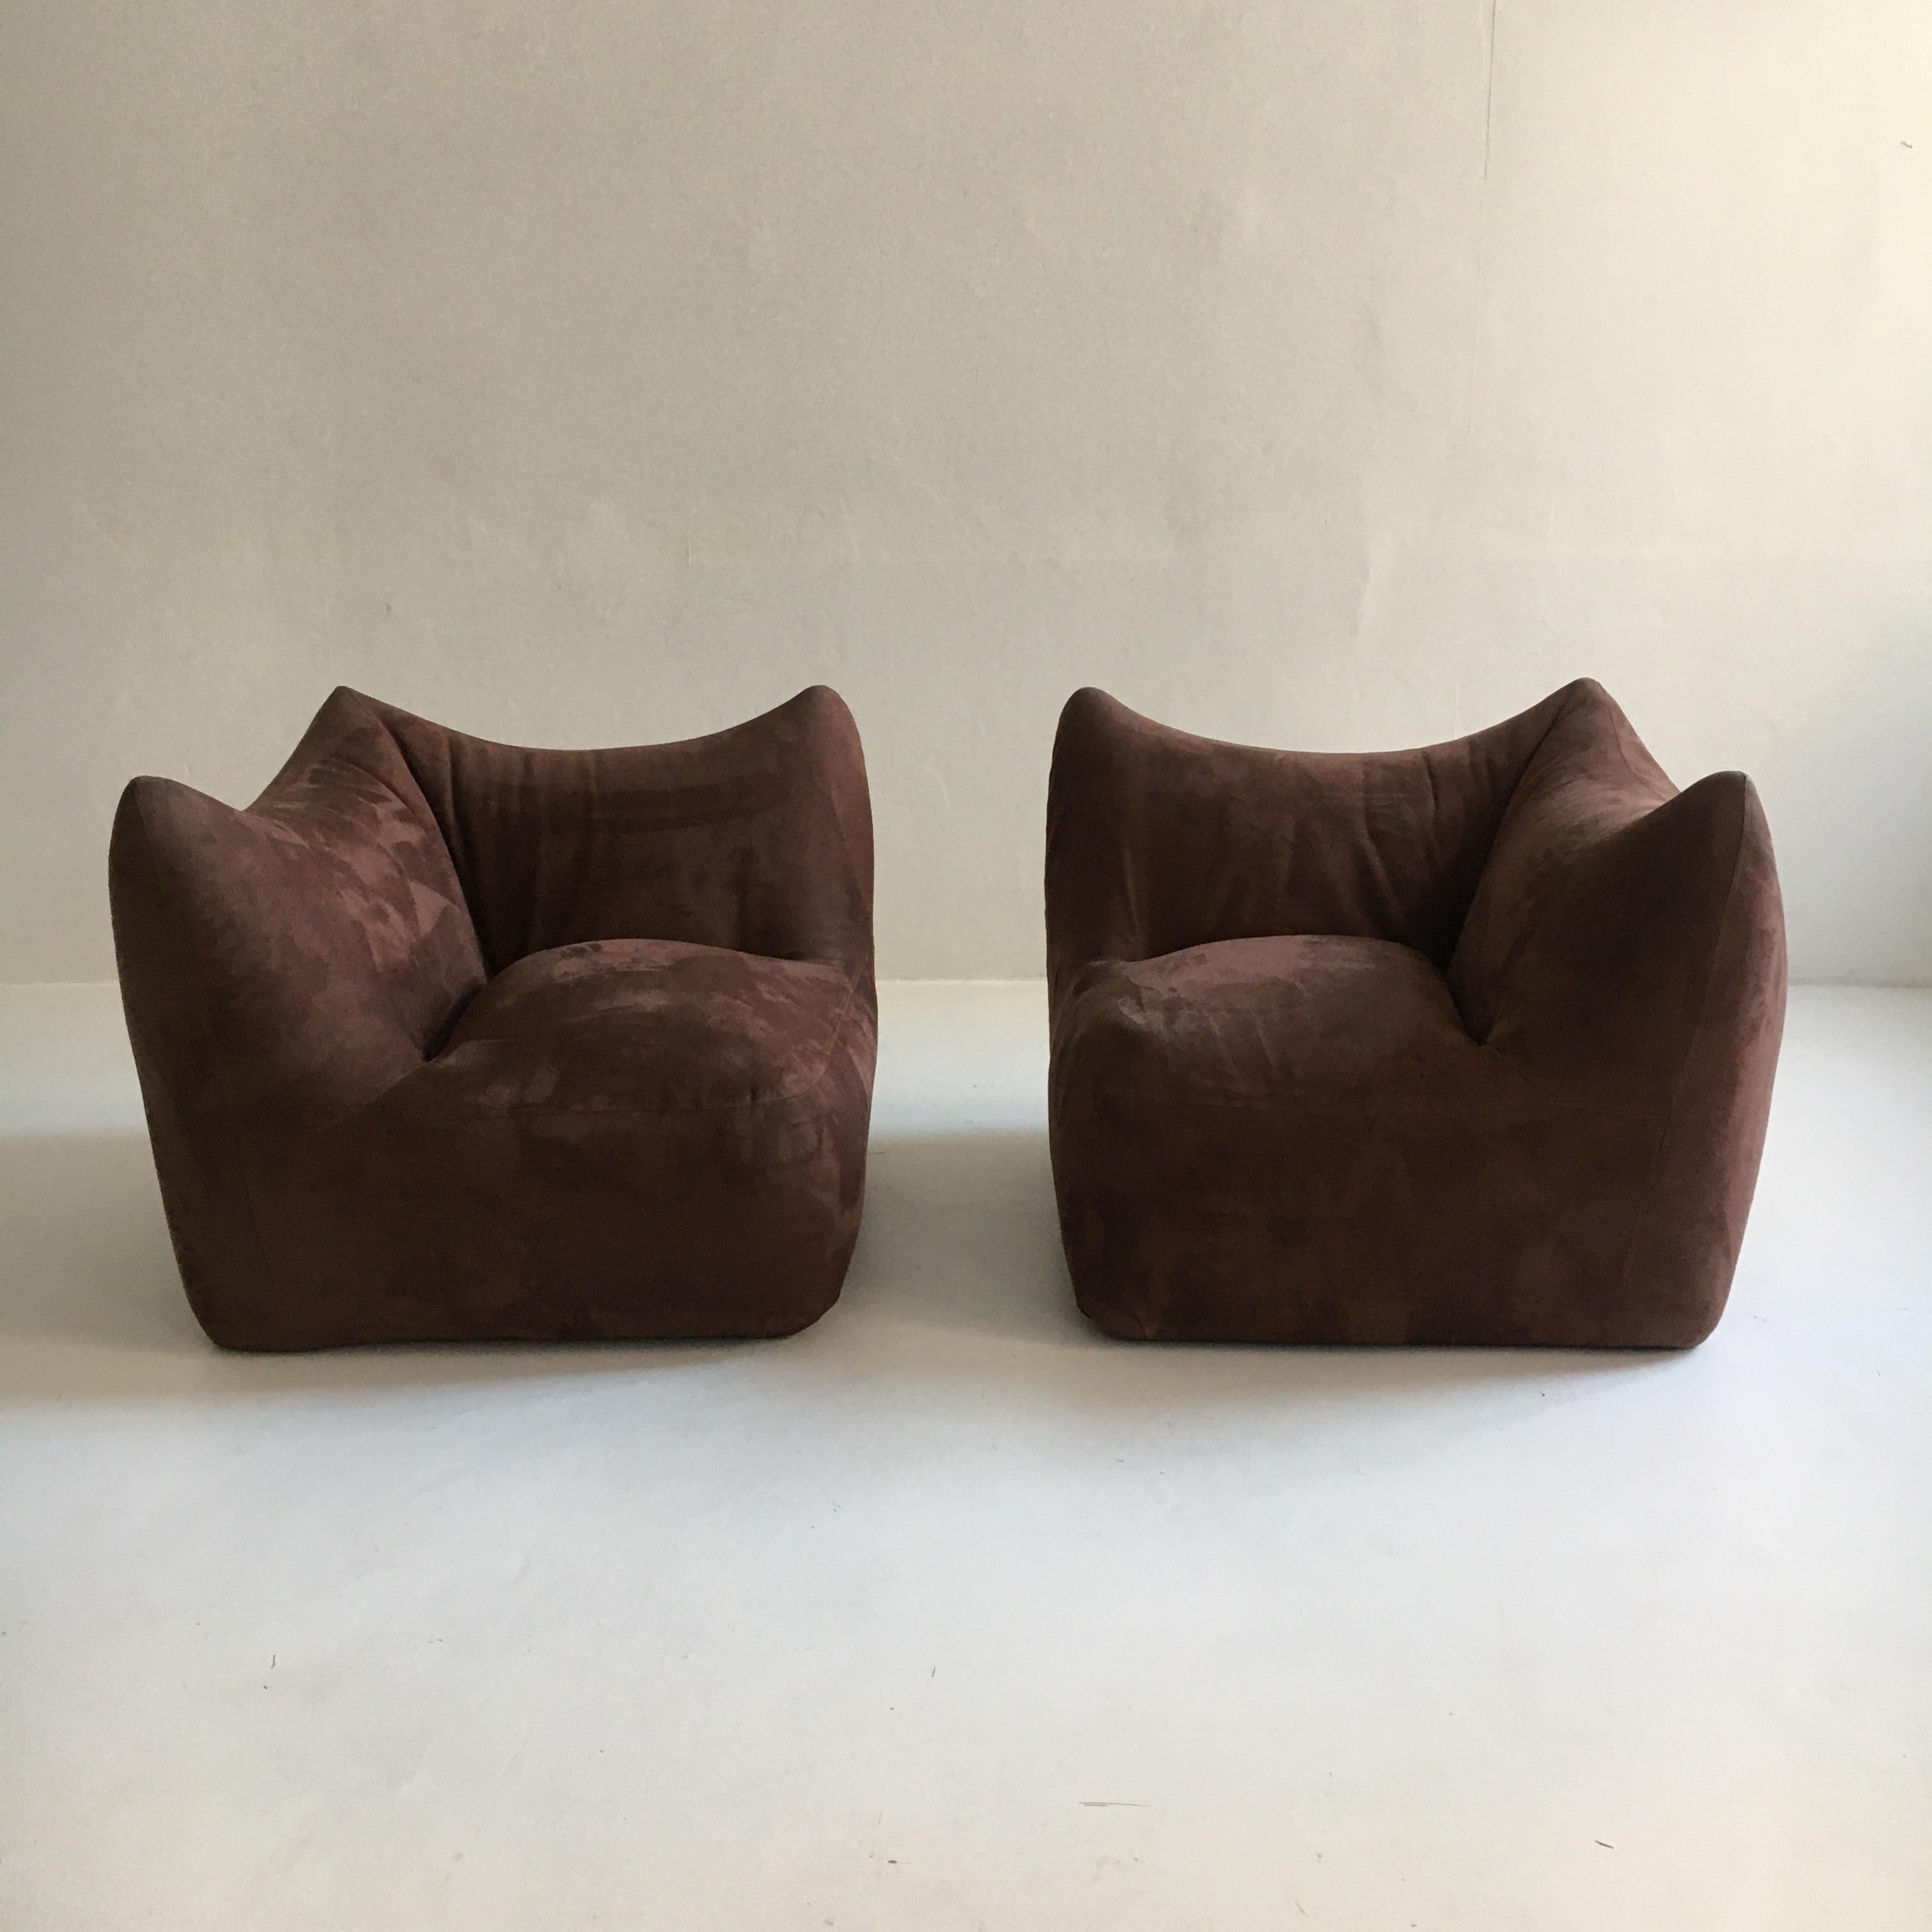 Italian Mario Bellini 'Le Bambole' Two Modular Elements, Pair of Lounge Chairs, Italy